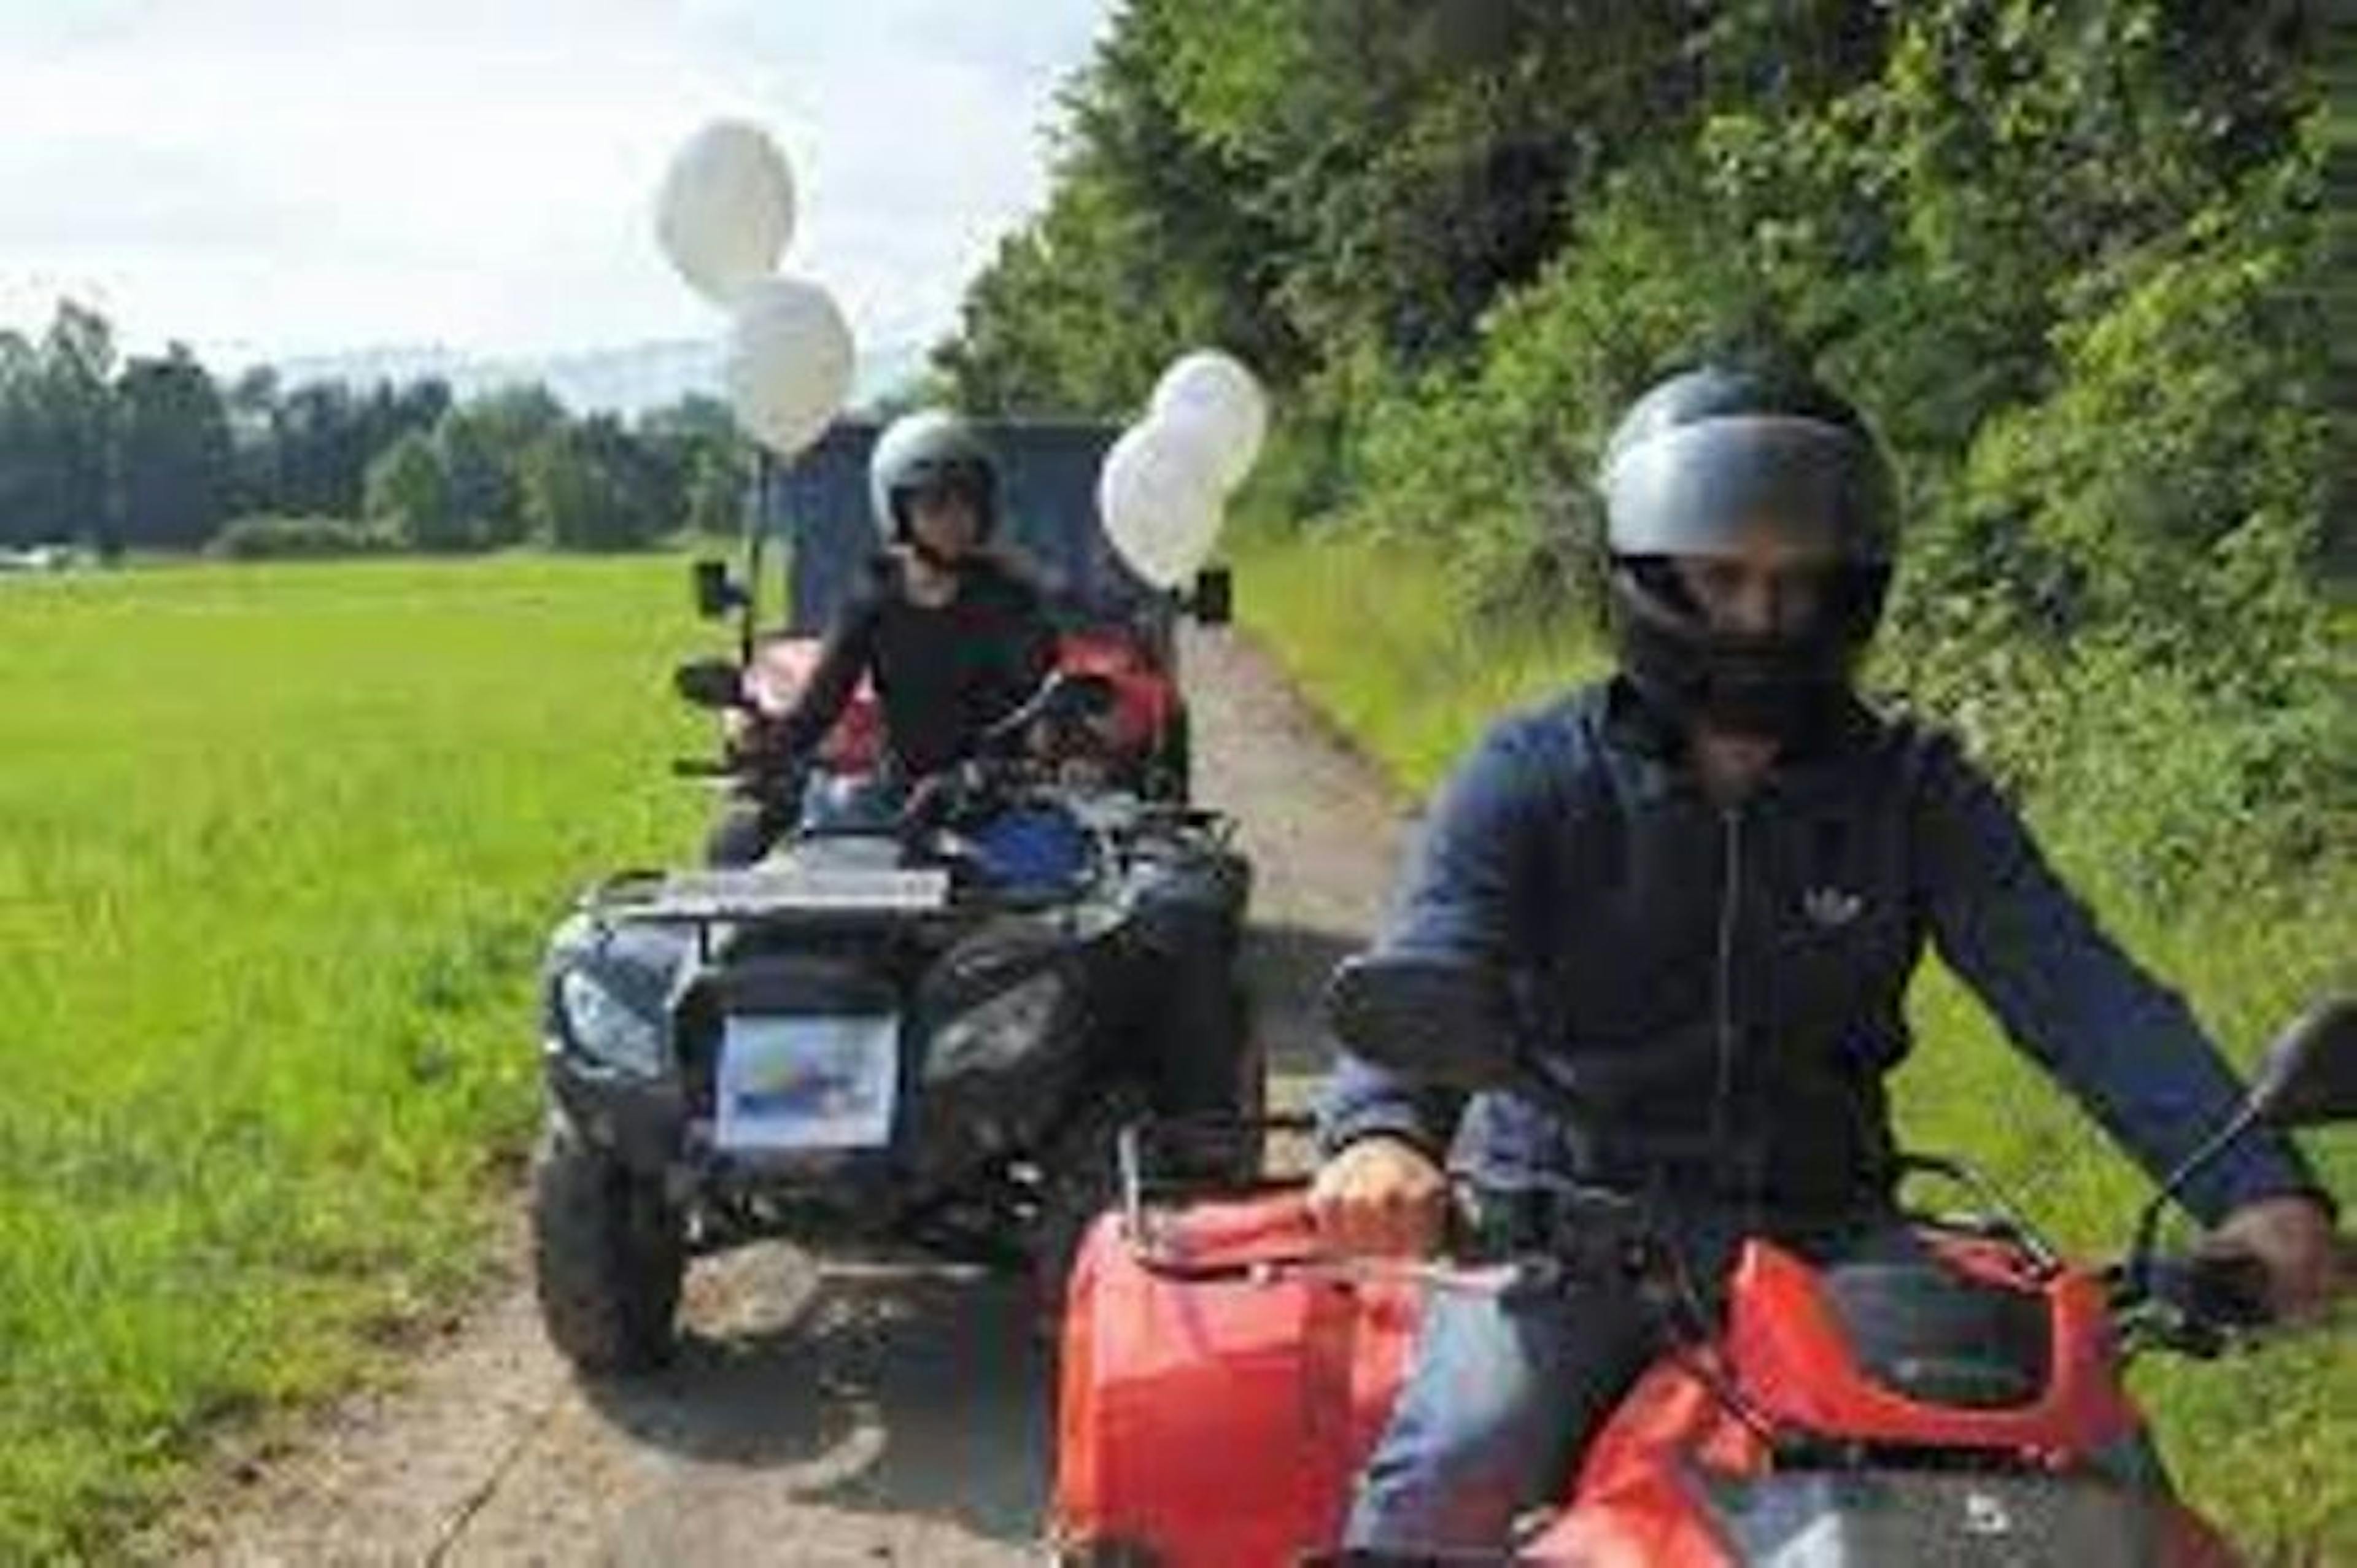 ATV birthday quad tour